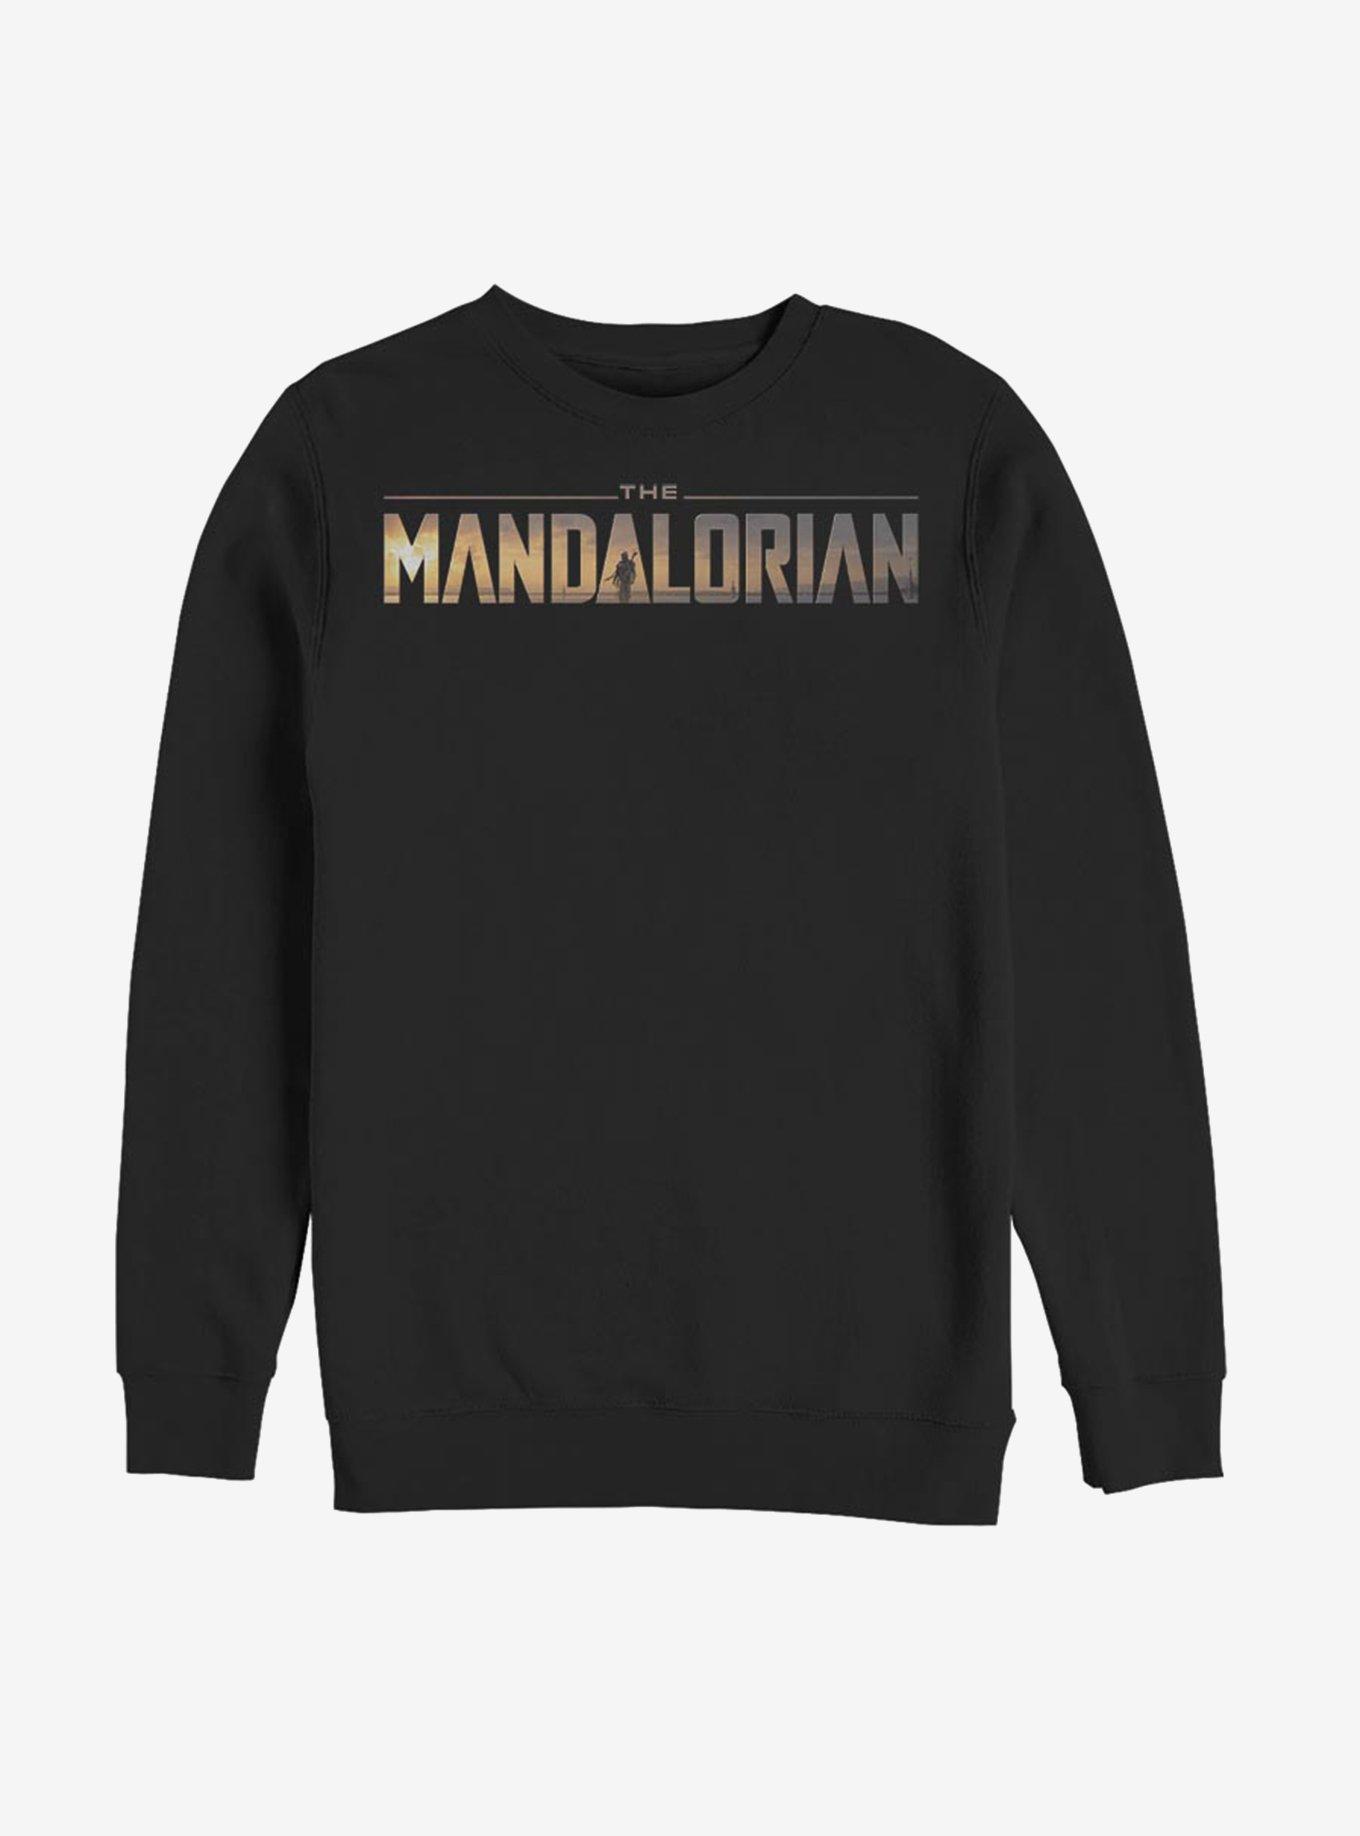 Star Wars The Mandalorian Logo Sweatshirt